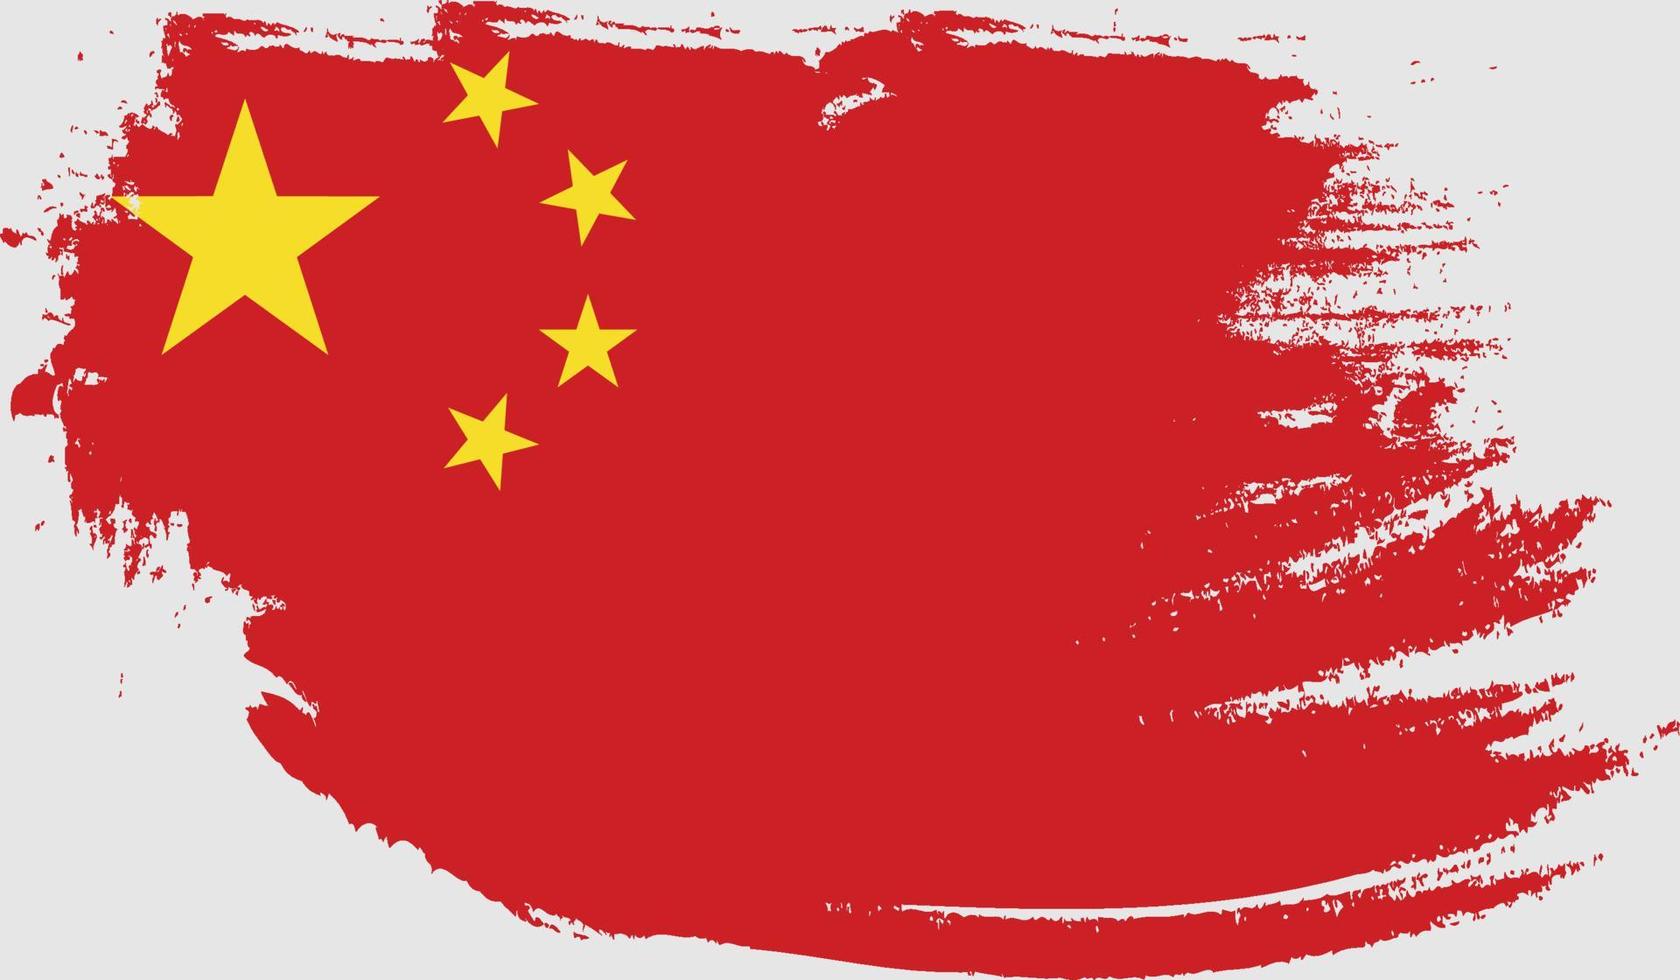 china vlag met grunge textuur vector